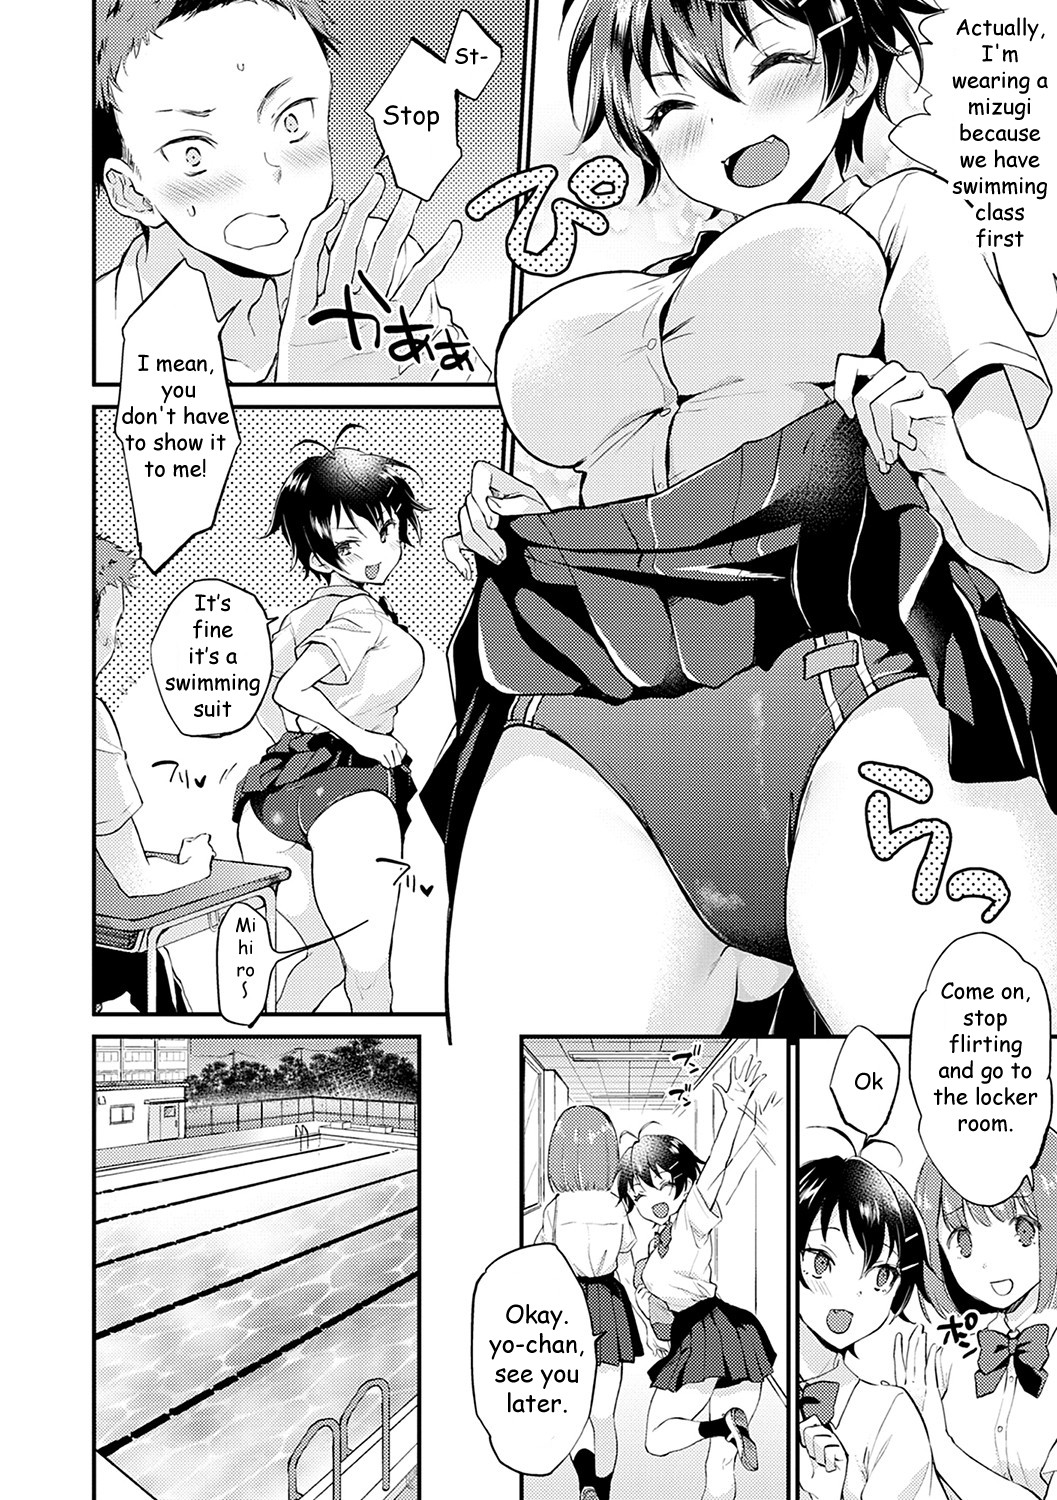 Hentai Manga Comic-No Pants Day Girlfriend-Read-2